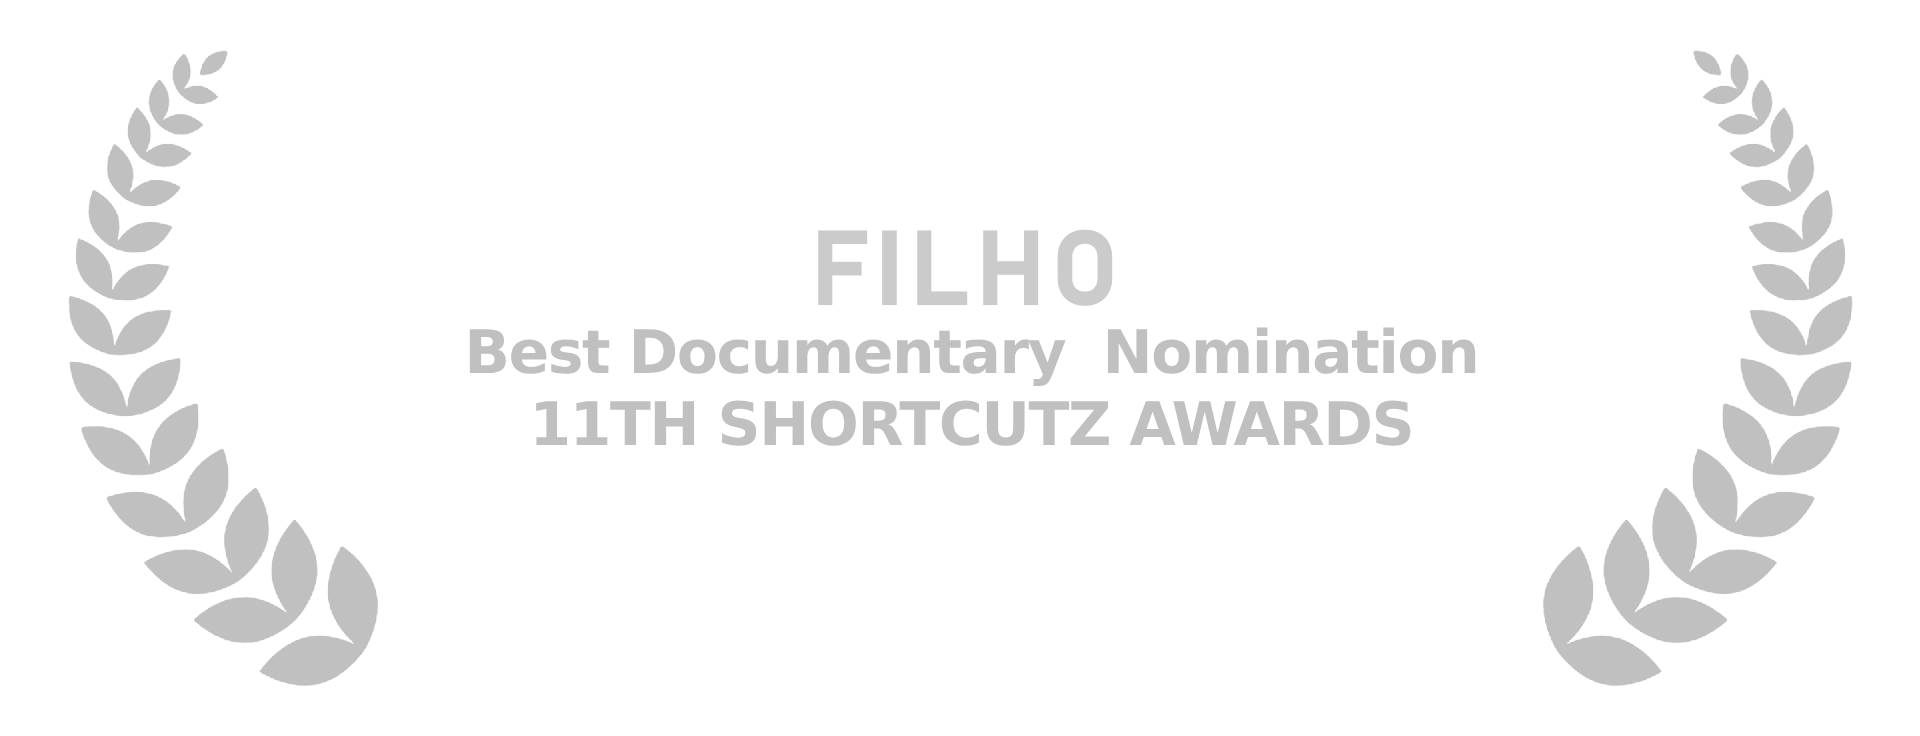 Shortcutz best documentary nomination Filho class=